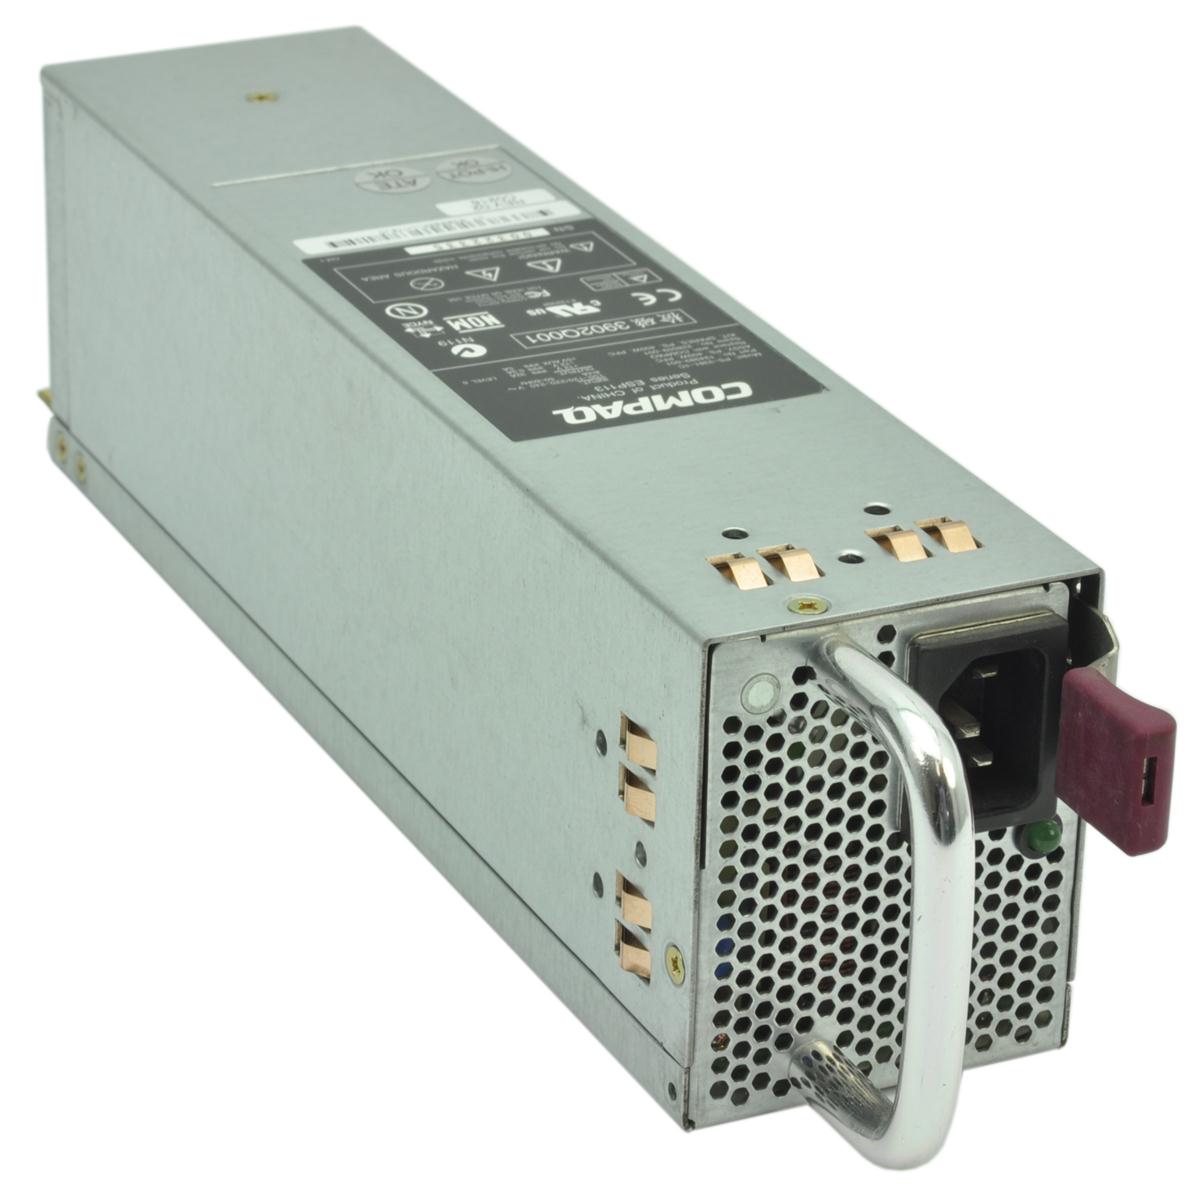 194989-001N HP 400-Watts 100-240V AC Redundant Hot Swap Power Supply with PFC for ProLiant DL380 G2/ G3 Server